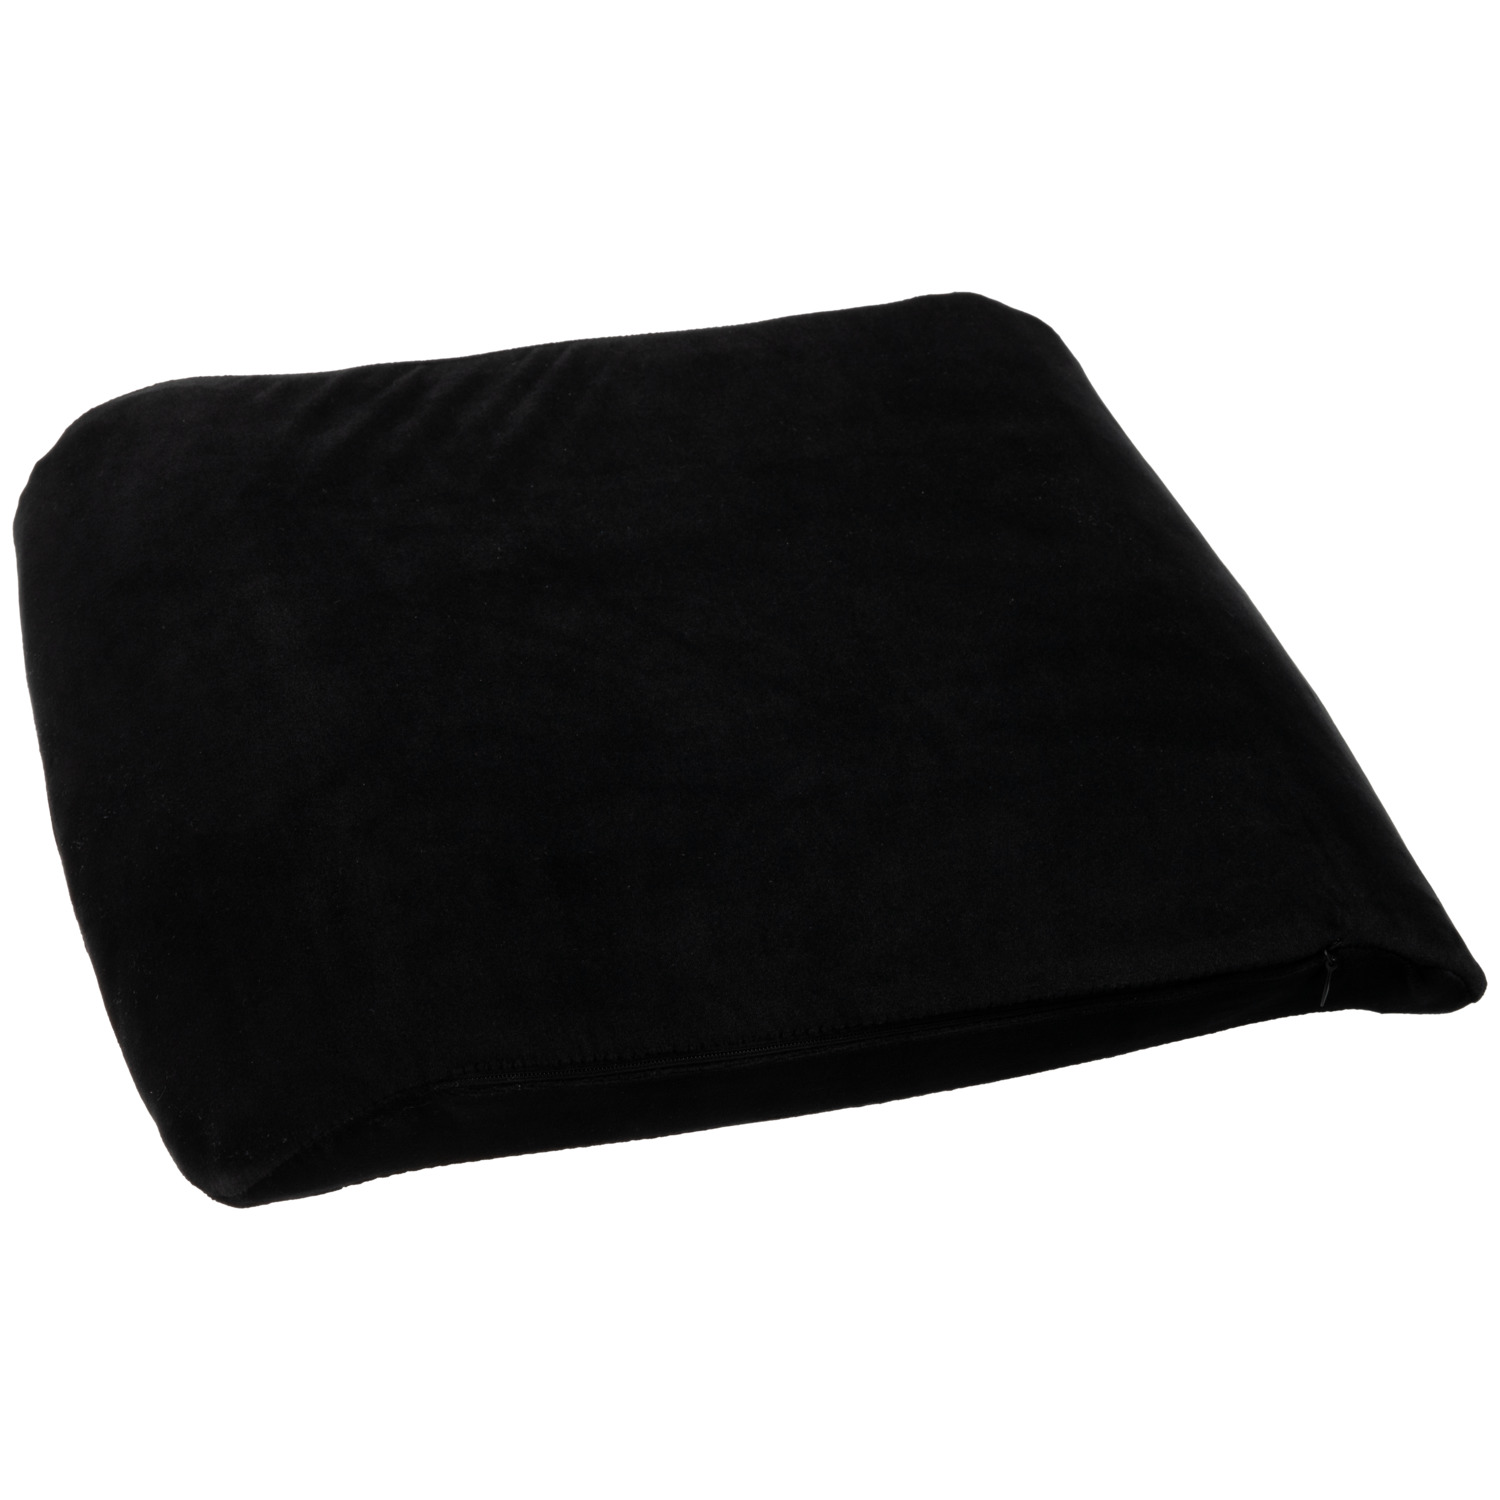 Nitro Concepts - Memory Foam Pillow Set Black/Red